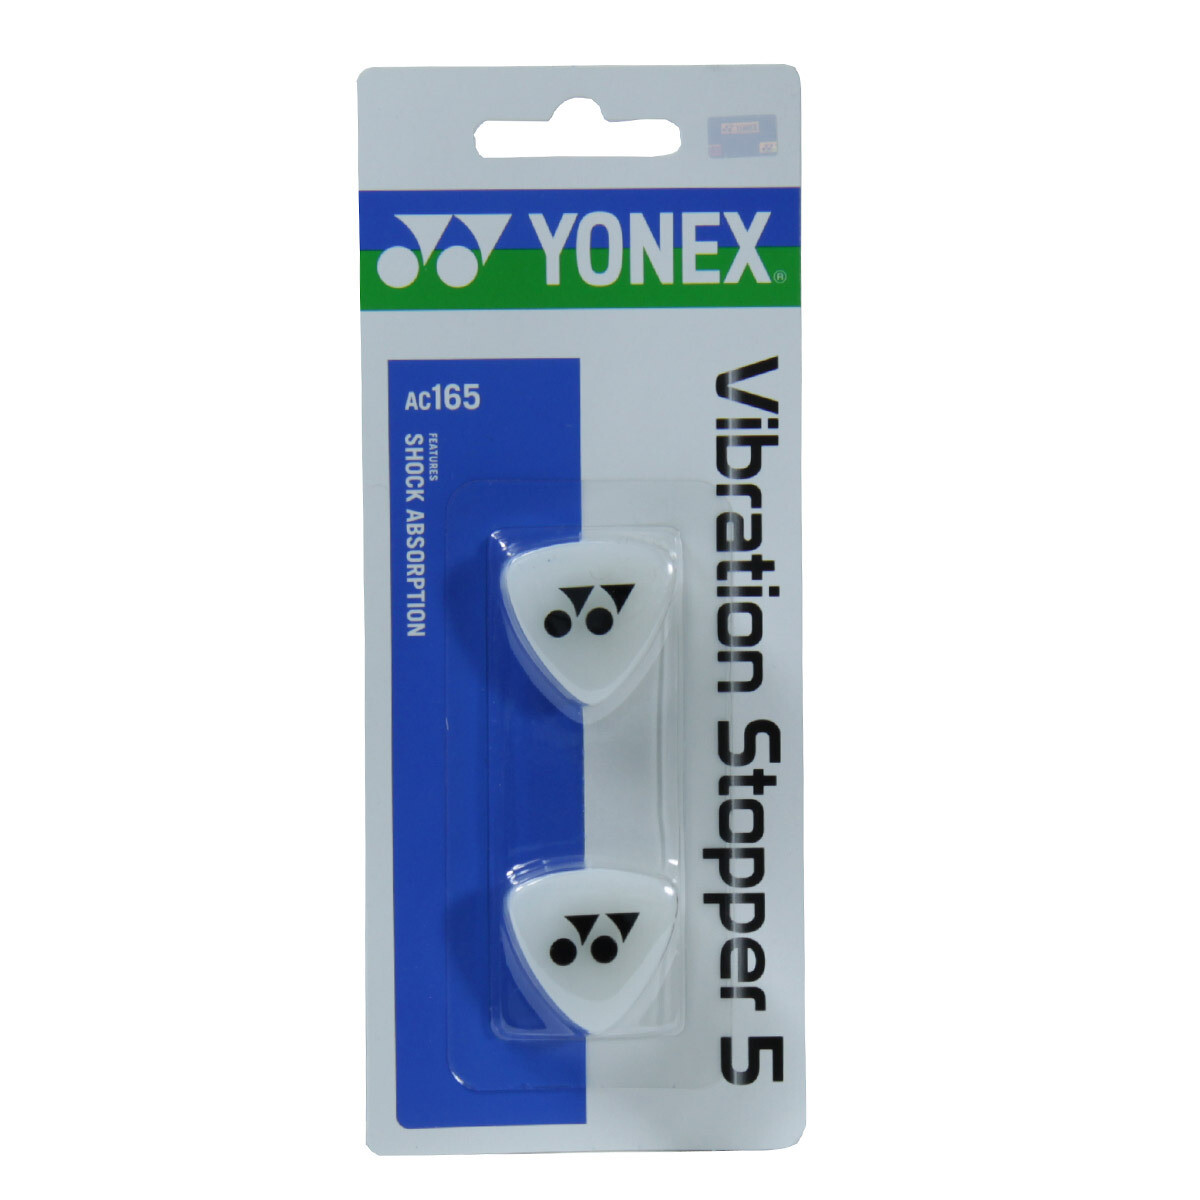 Yonex Vibration Dampener AC165EX - Clear